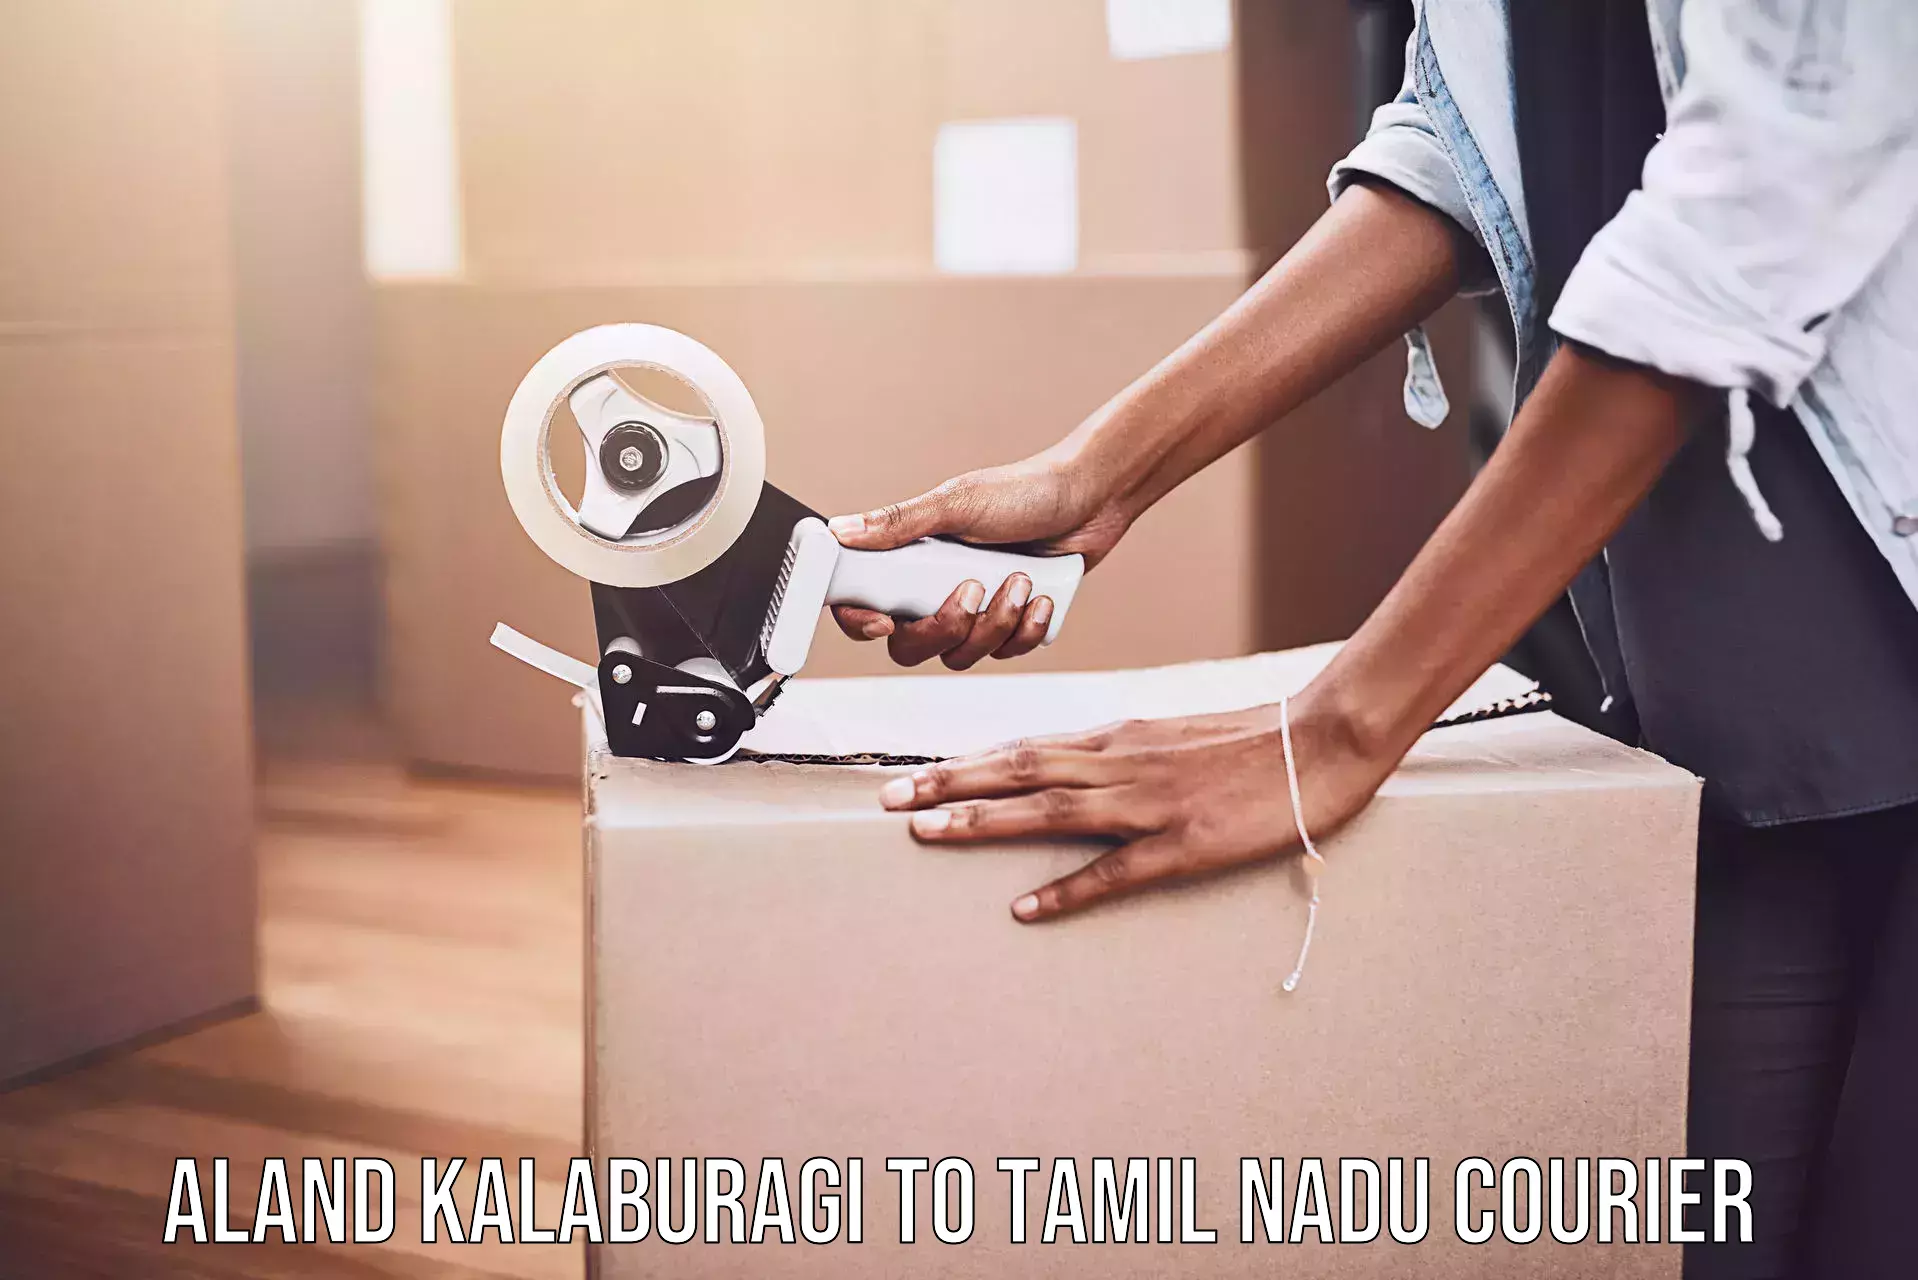 Courier service partnerships in Aland Kalaburagi to Krishnagiri